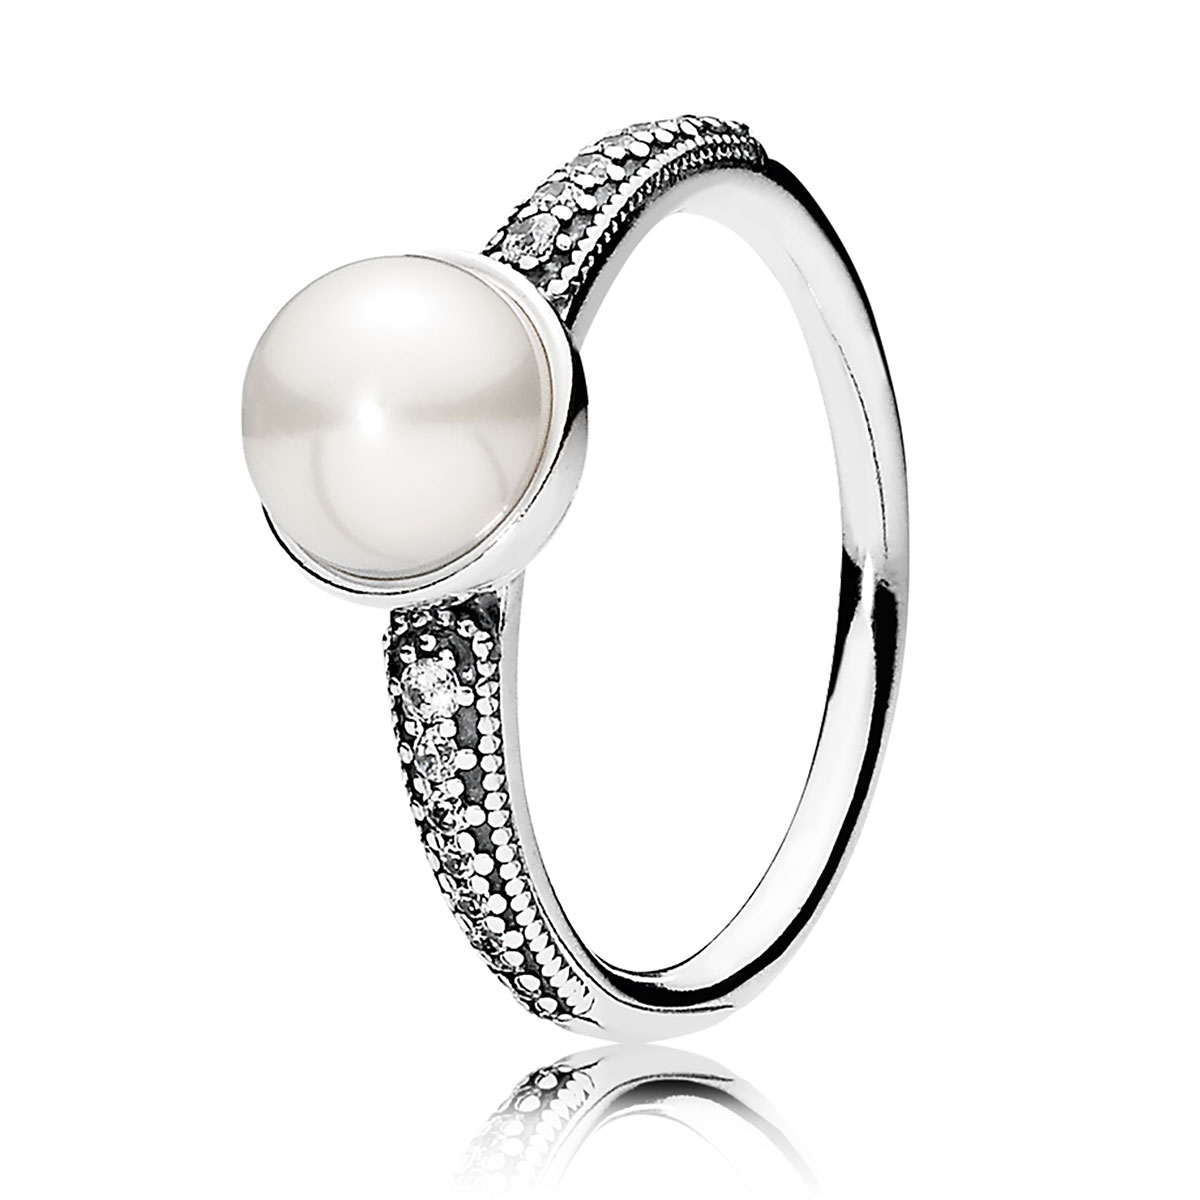 PANDORA Elegant Beauty Ring, White Pearl & Clear CZ Precious Accents, Ltd.